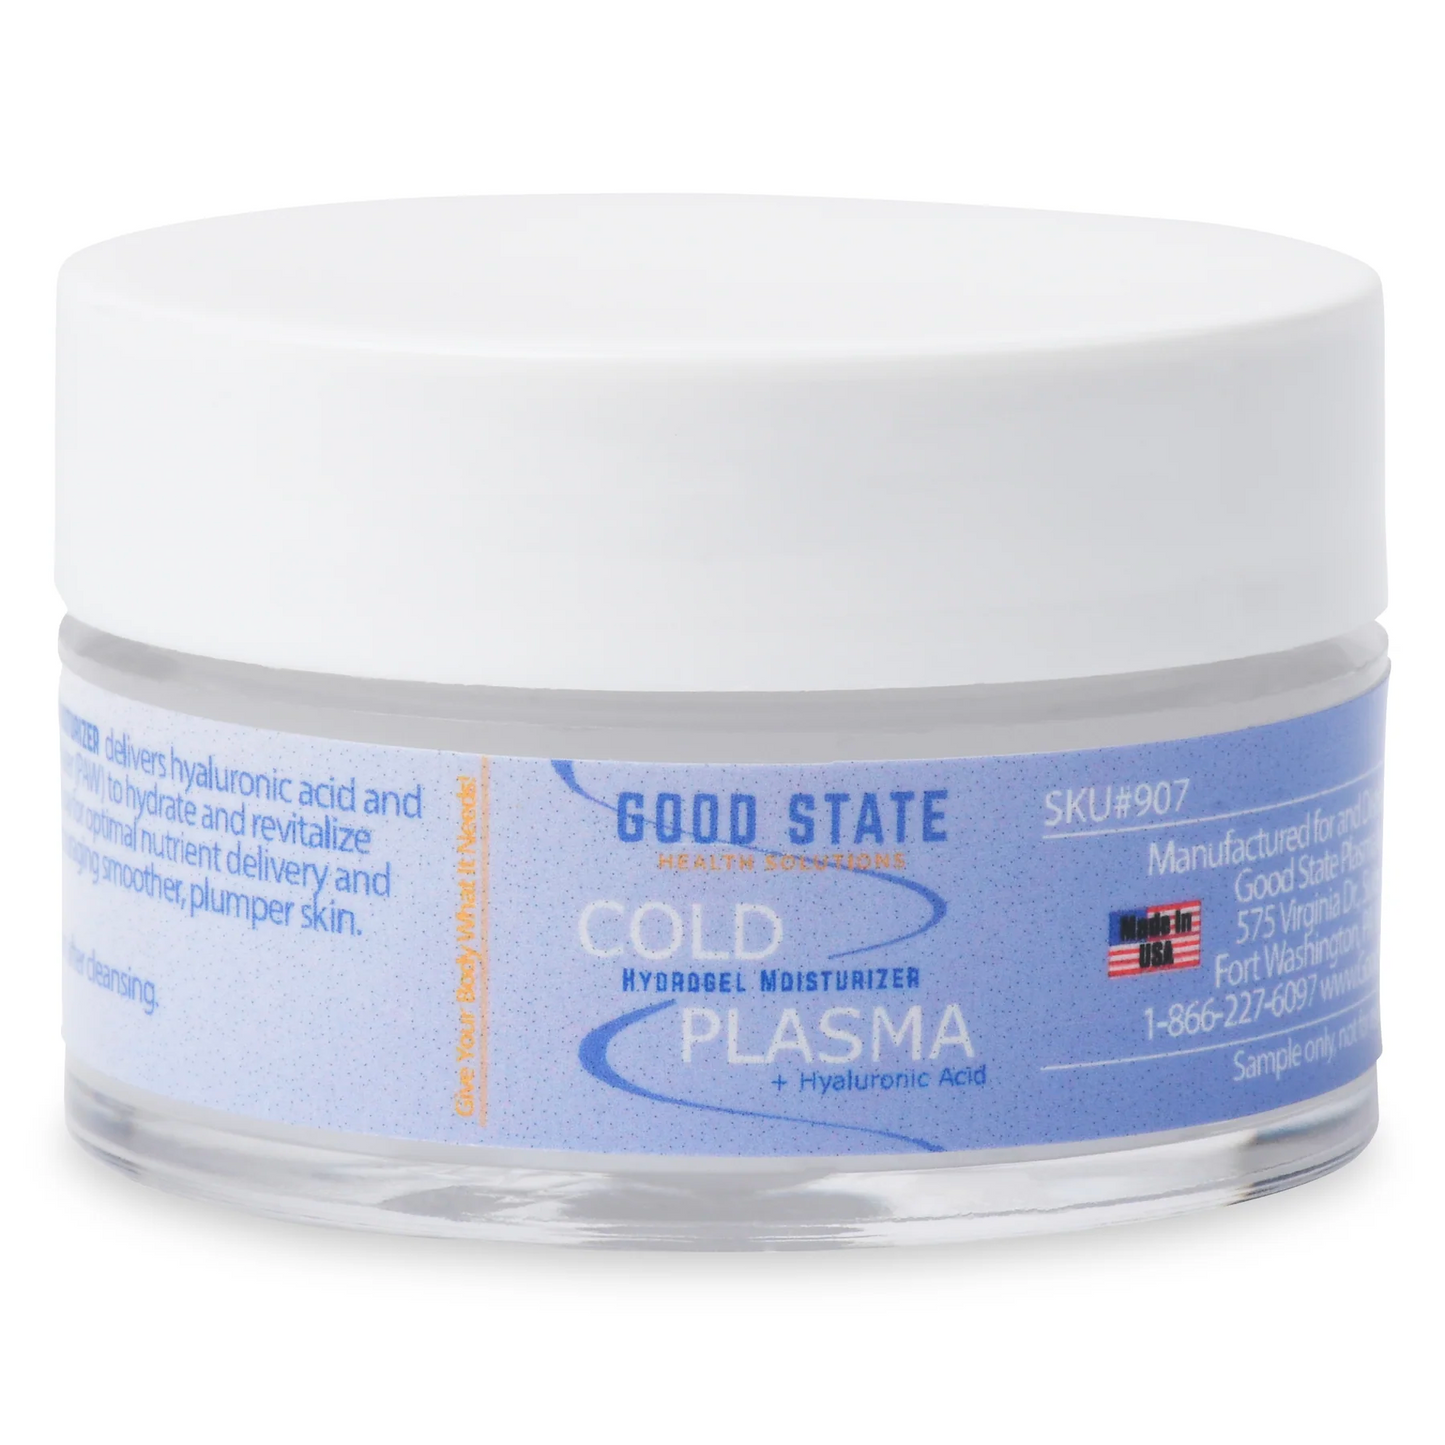 Plasma Face Cream | Hydrogel Moisturizer | Hyaluronic Acid - 907